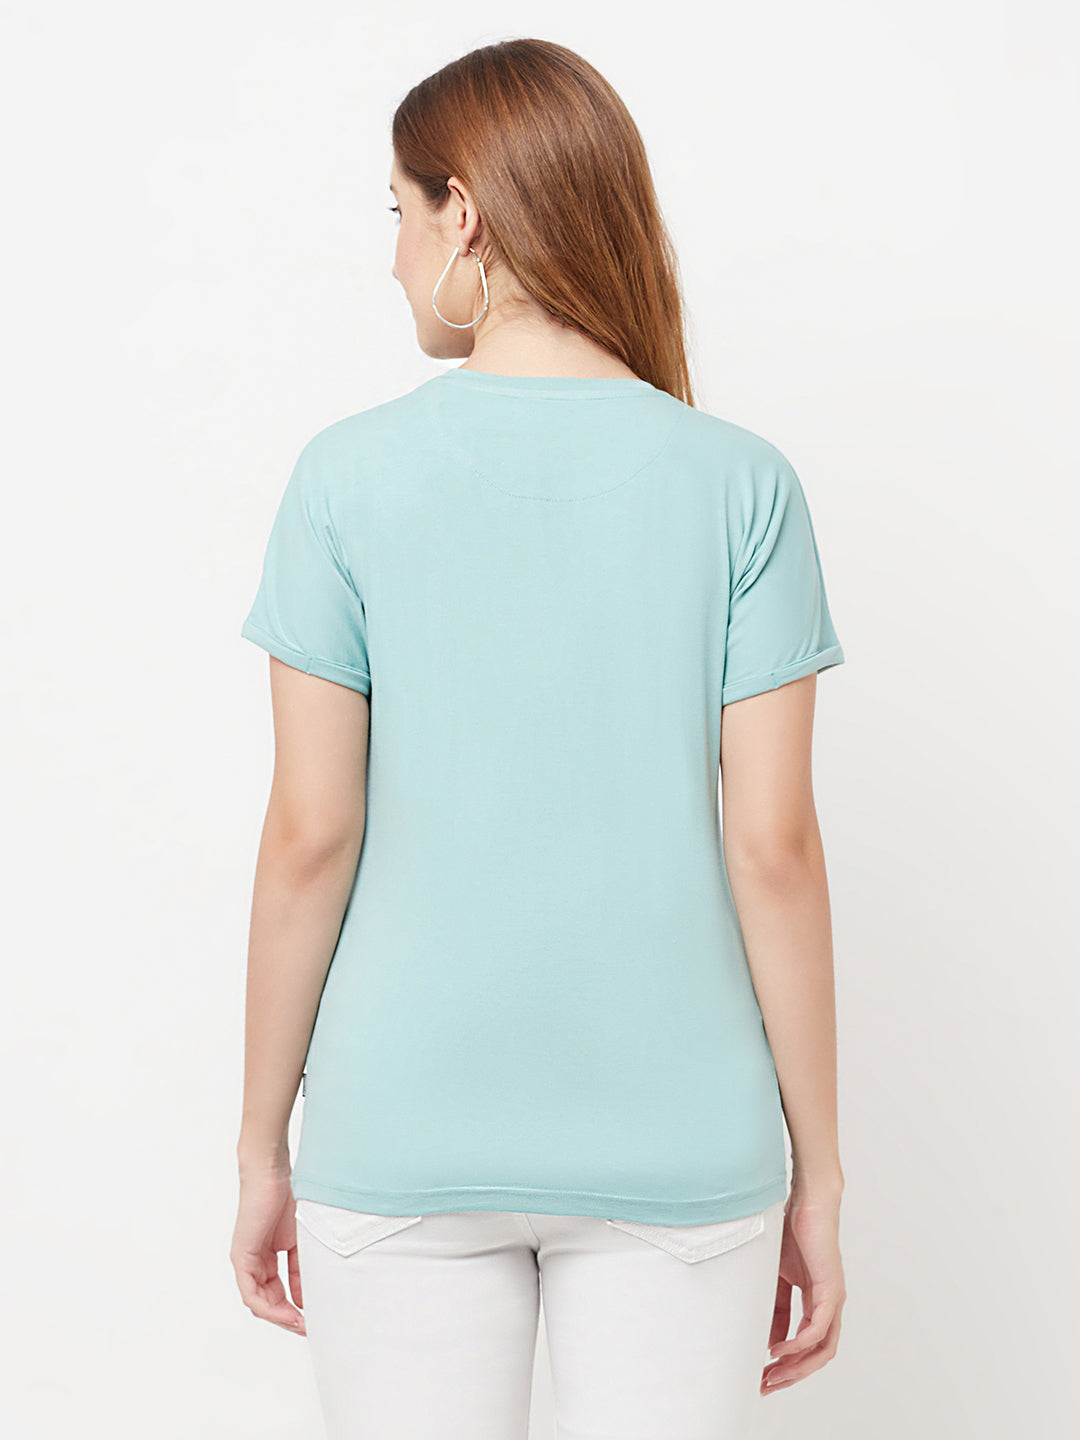 Mint-Green Printed Round Neck T-Shirt - Women T-Shirts